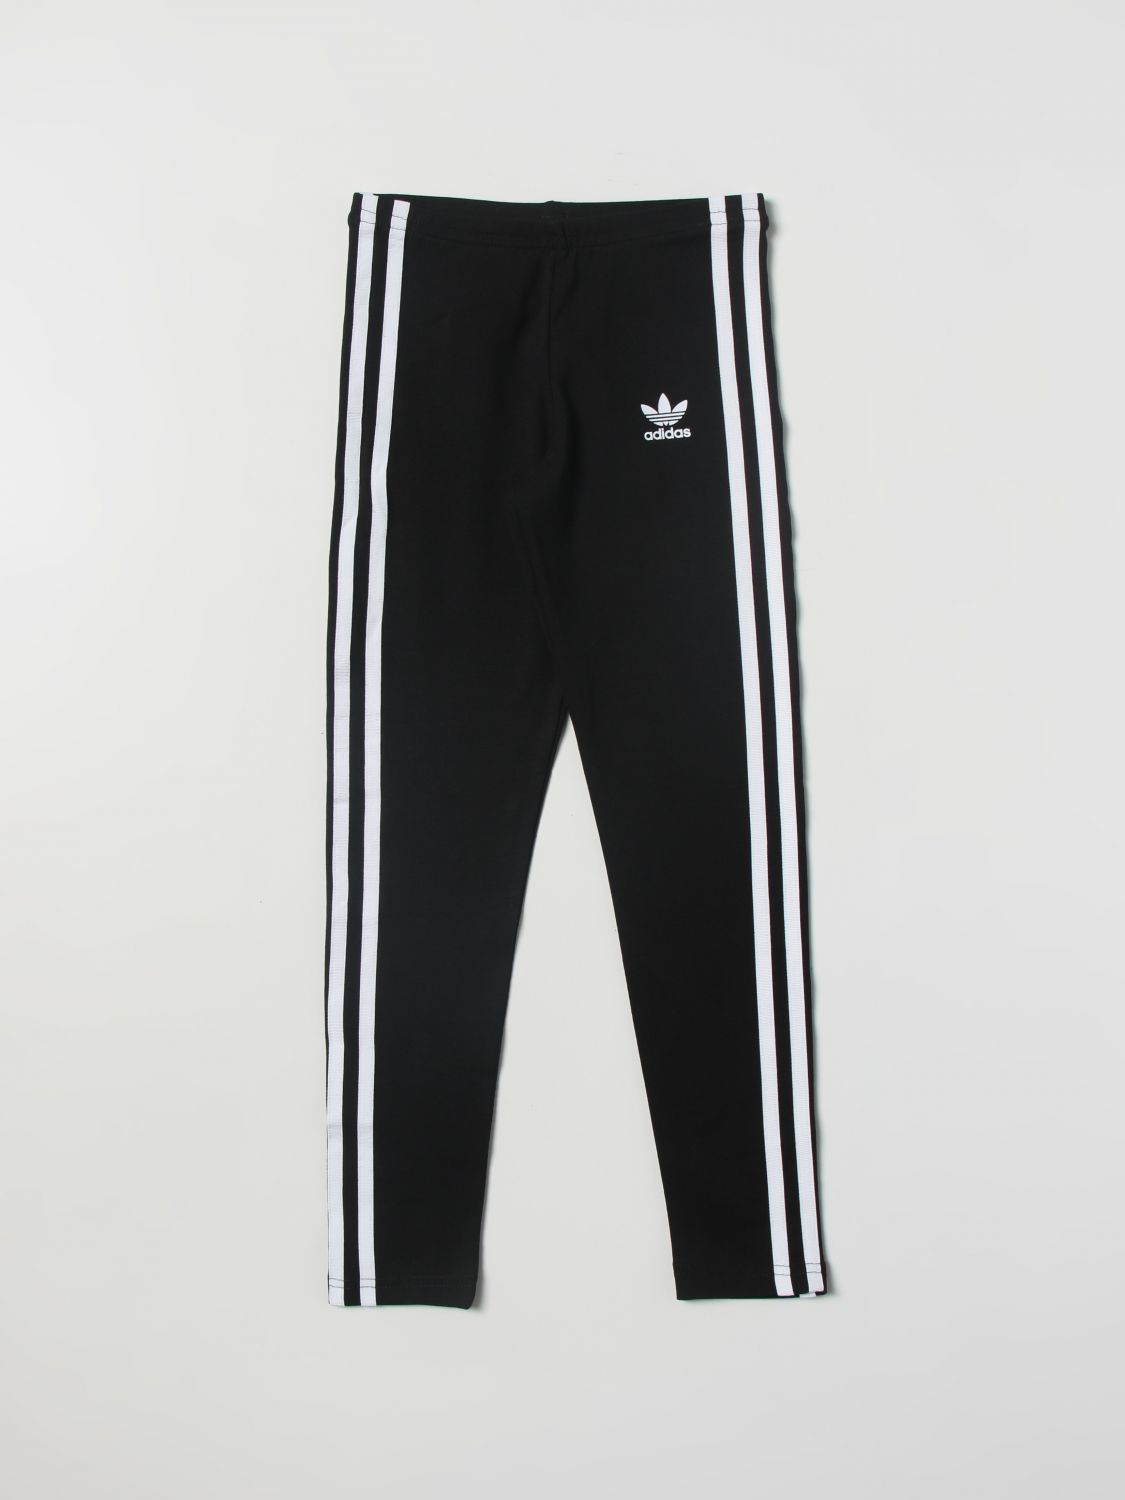 ADIDAS ORIGINALS: pants for girls - Black | Adidas Originals pants ...